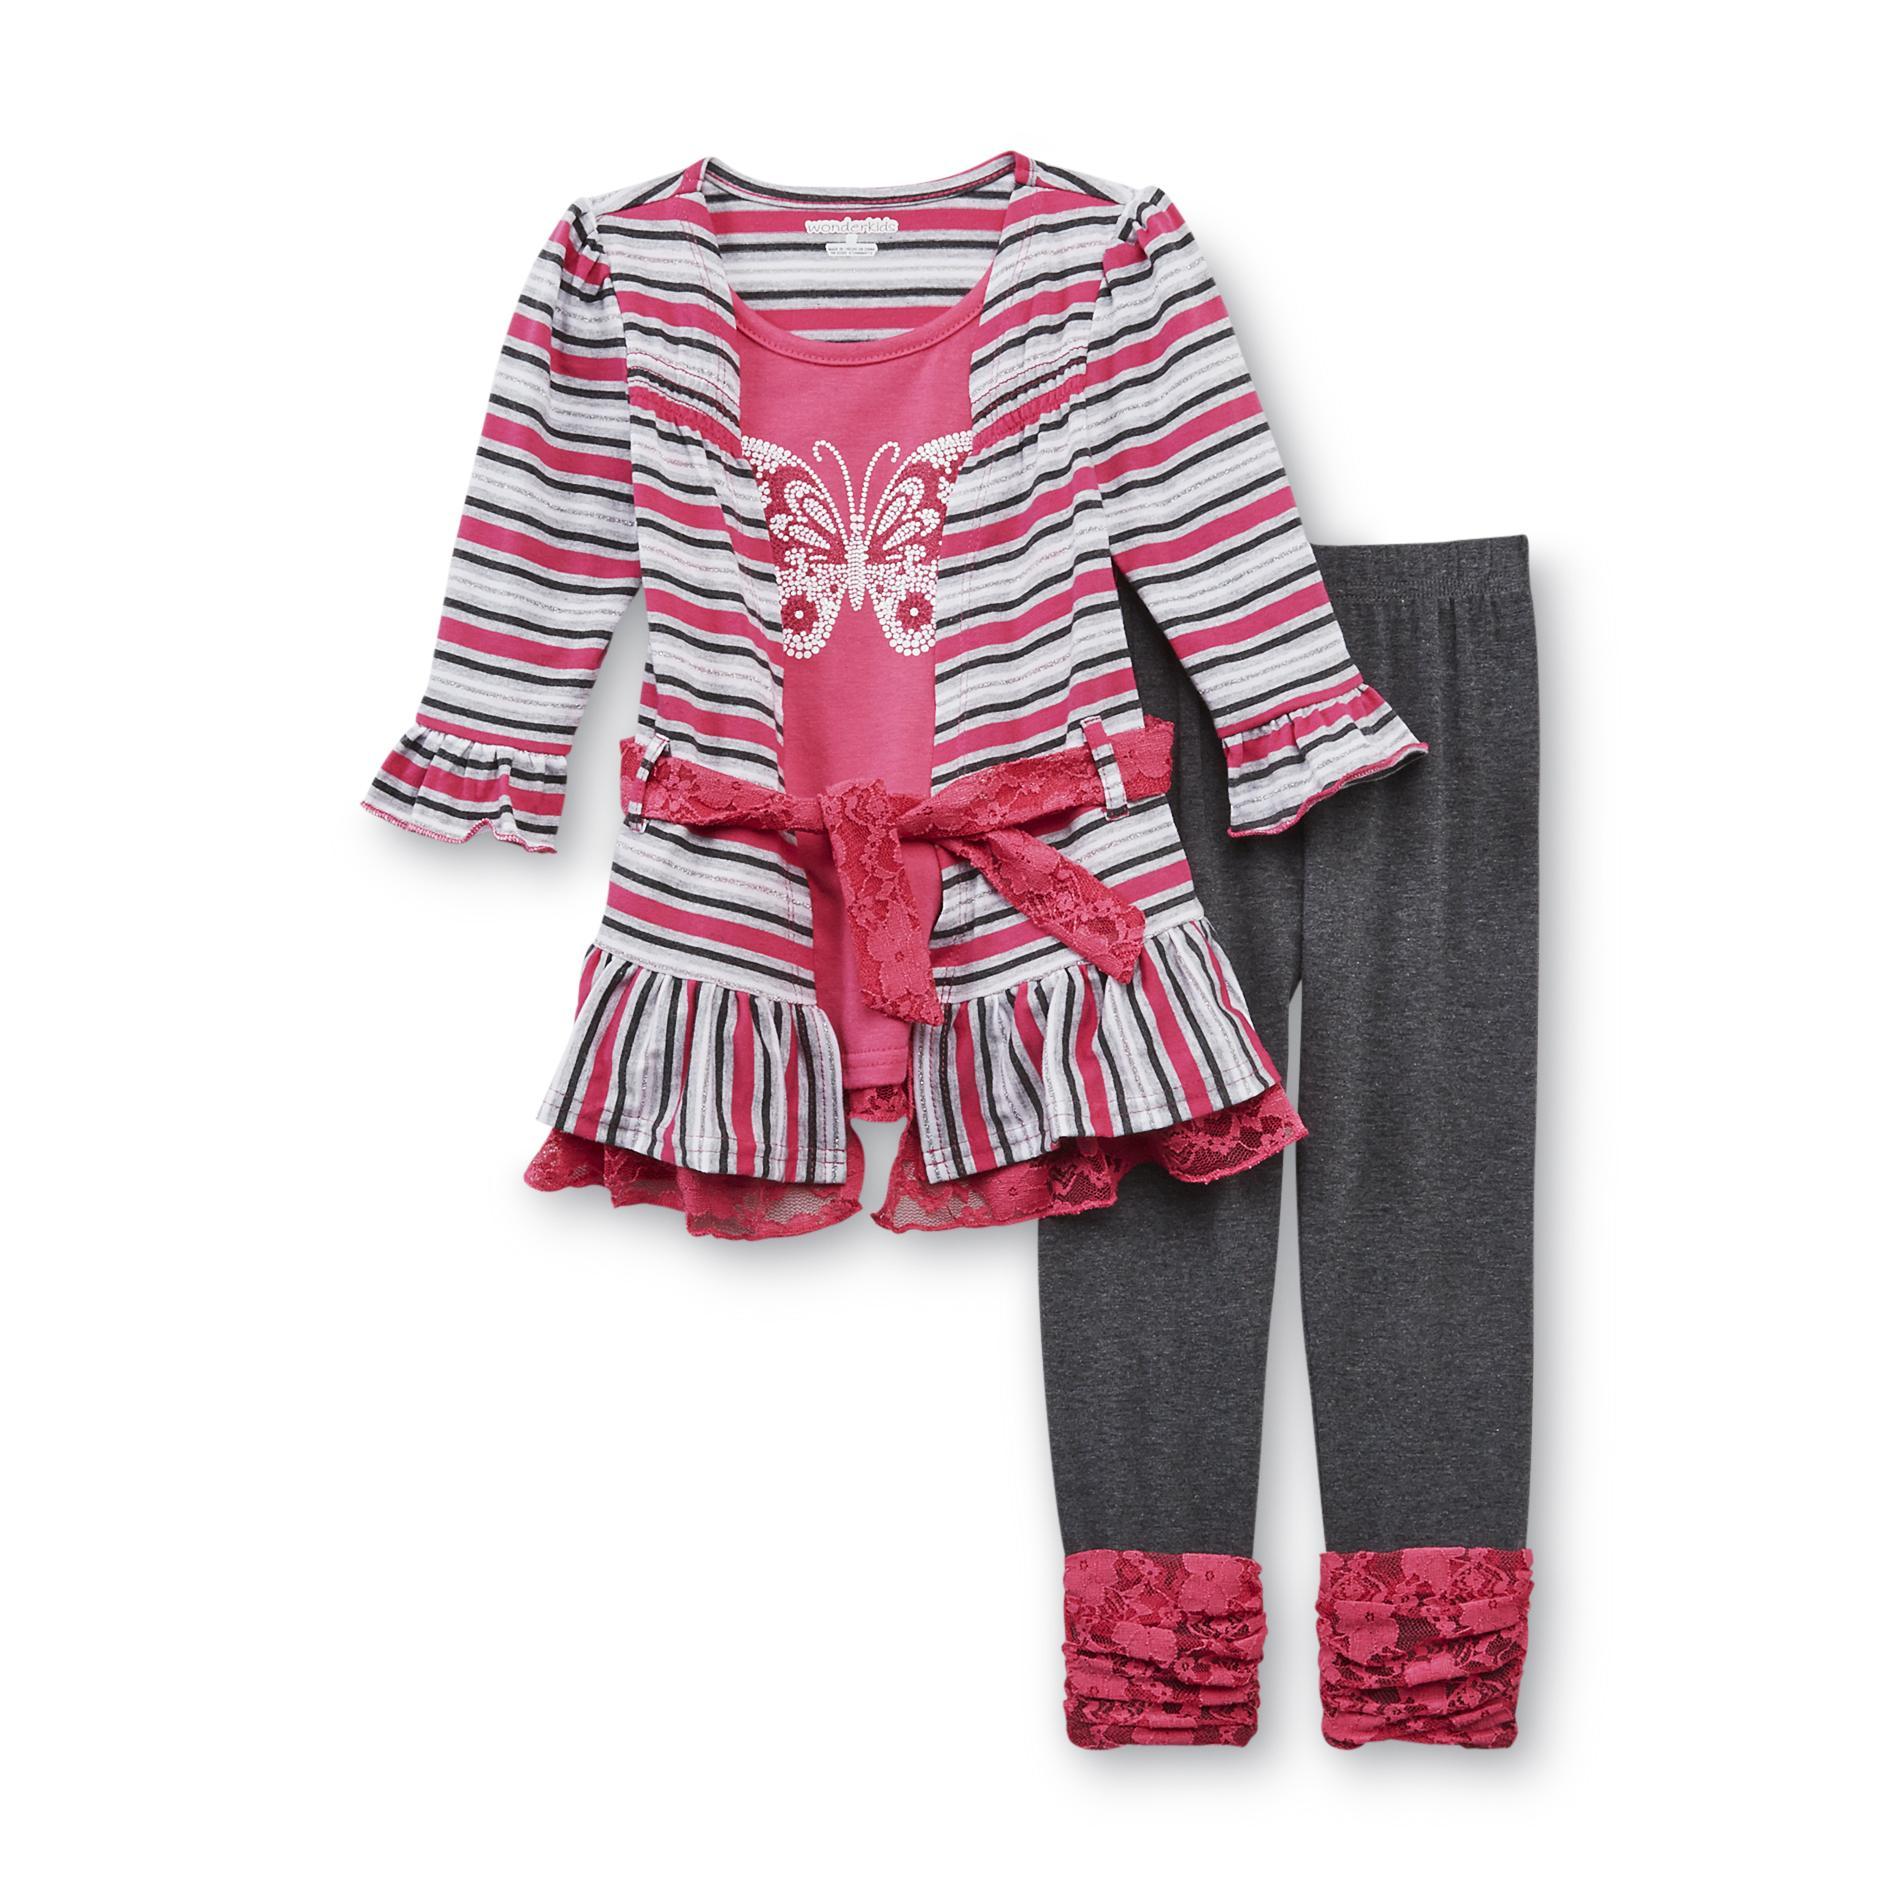 WonderKids Infant & Toddler Girl's Layered-Look Top & Leggings - Butterfly